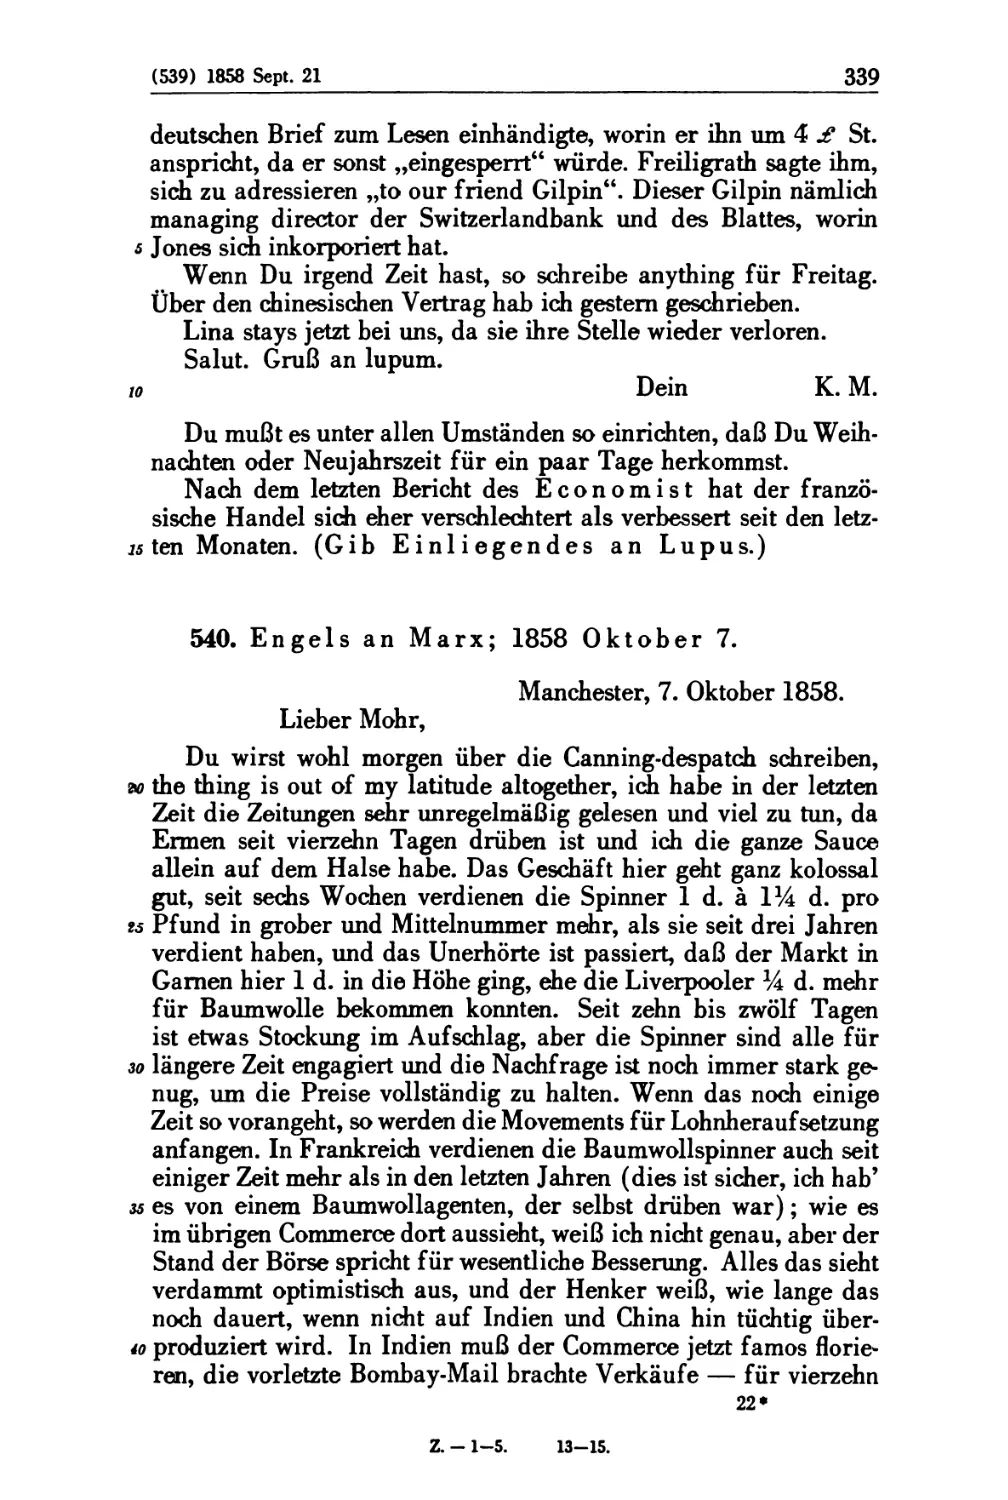 540. Engels an Marx; 1858 Oktober 7